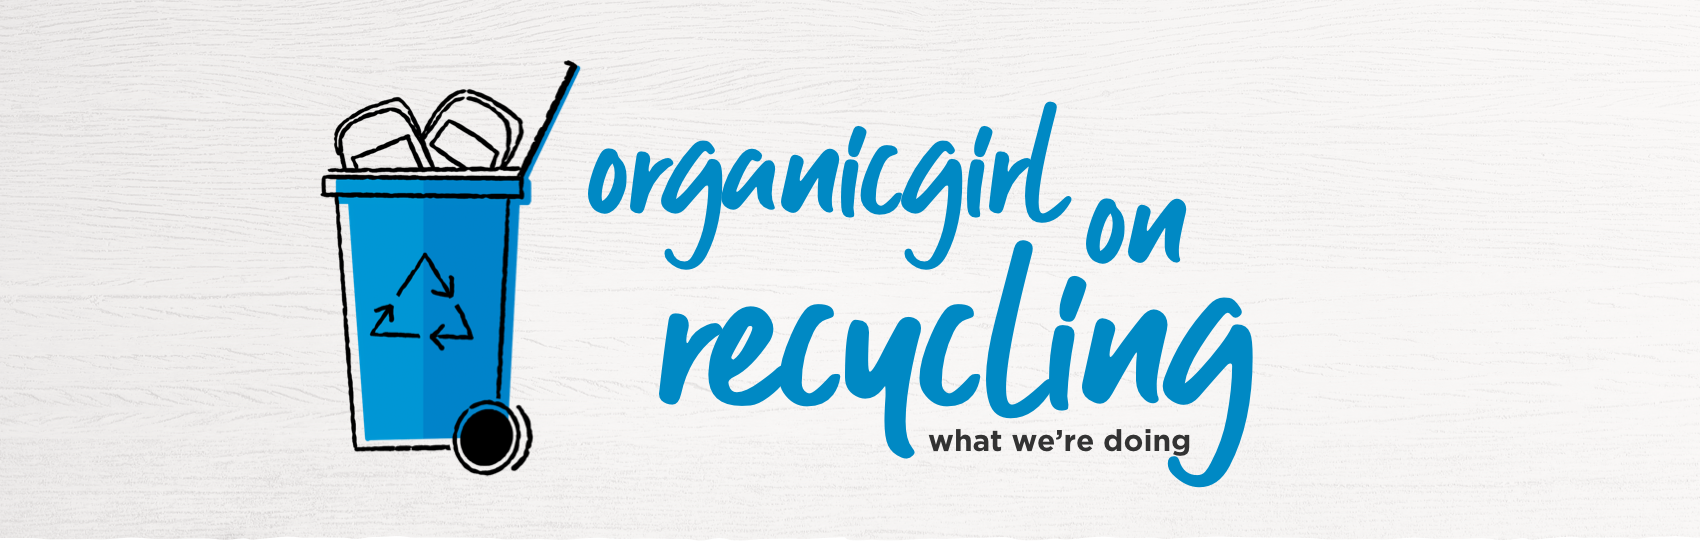 Organicgirl on Recycling